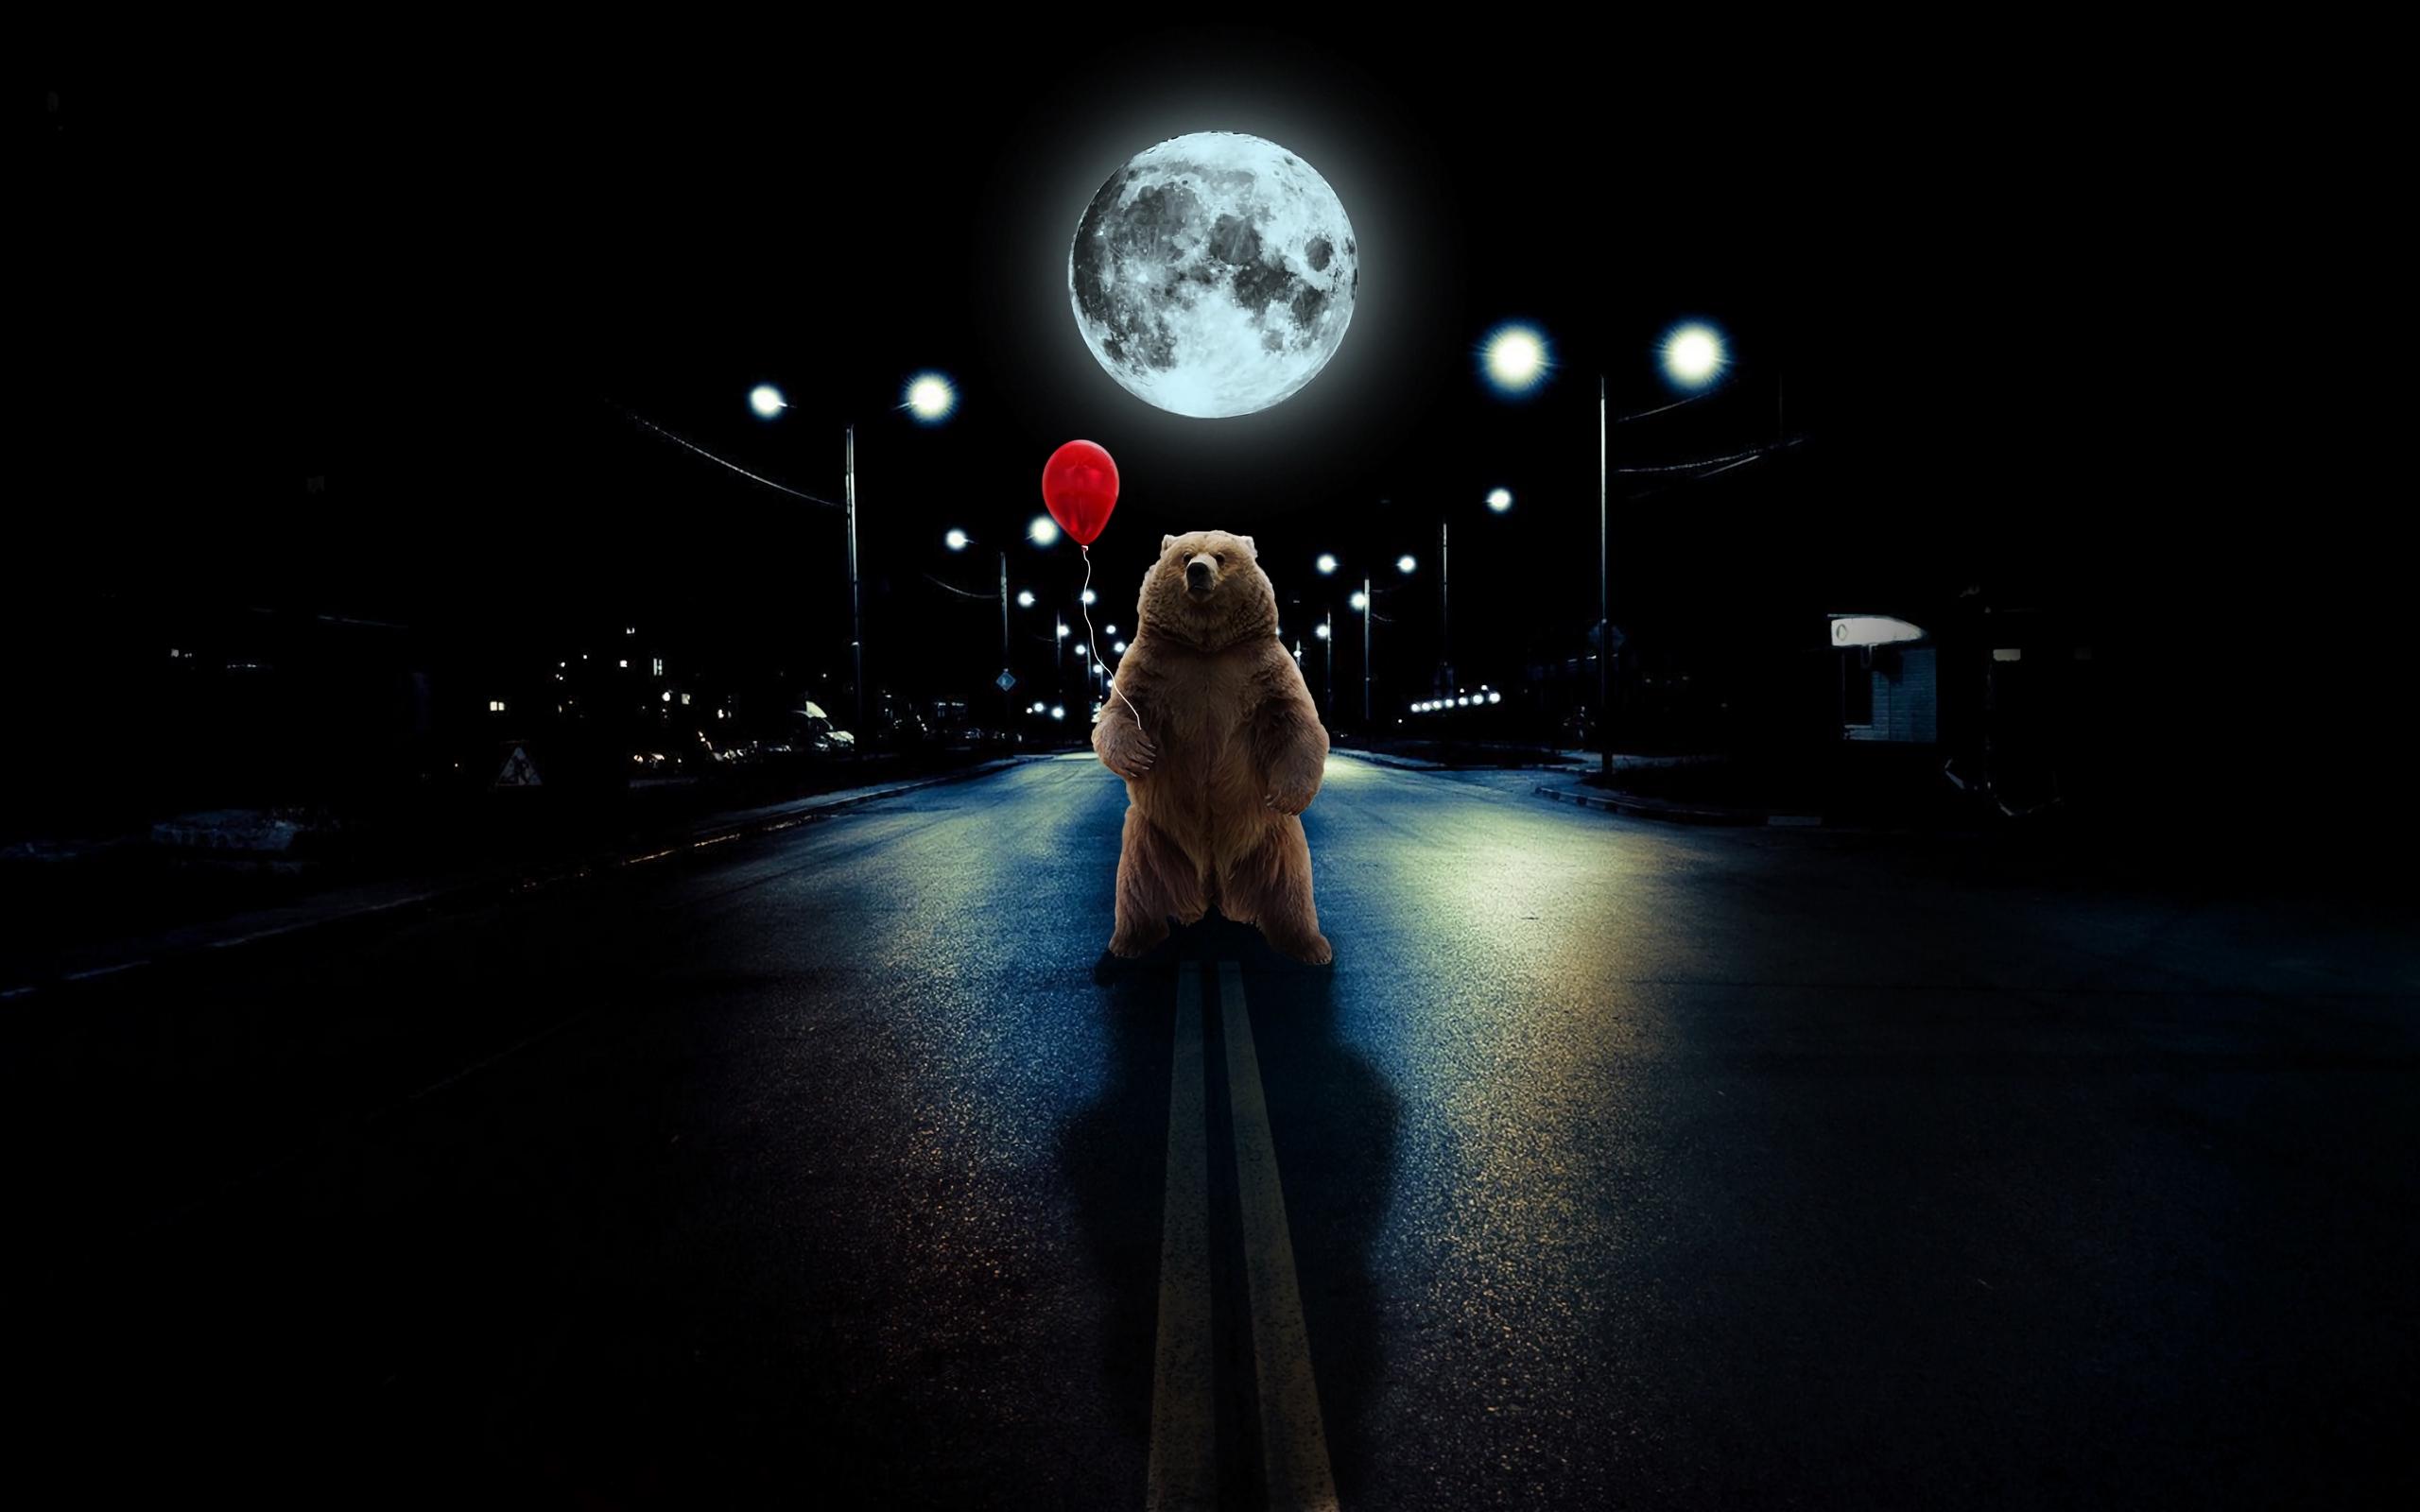 Download wallpaper 2560x1600 bear, balloon, full moon, road